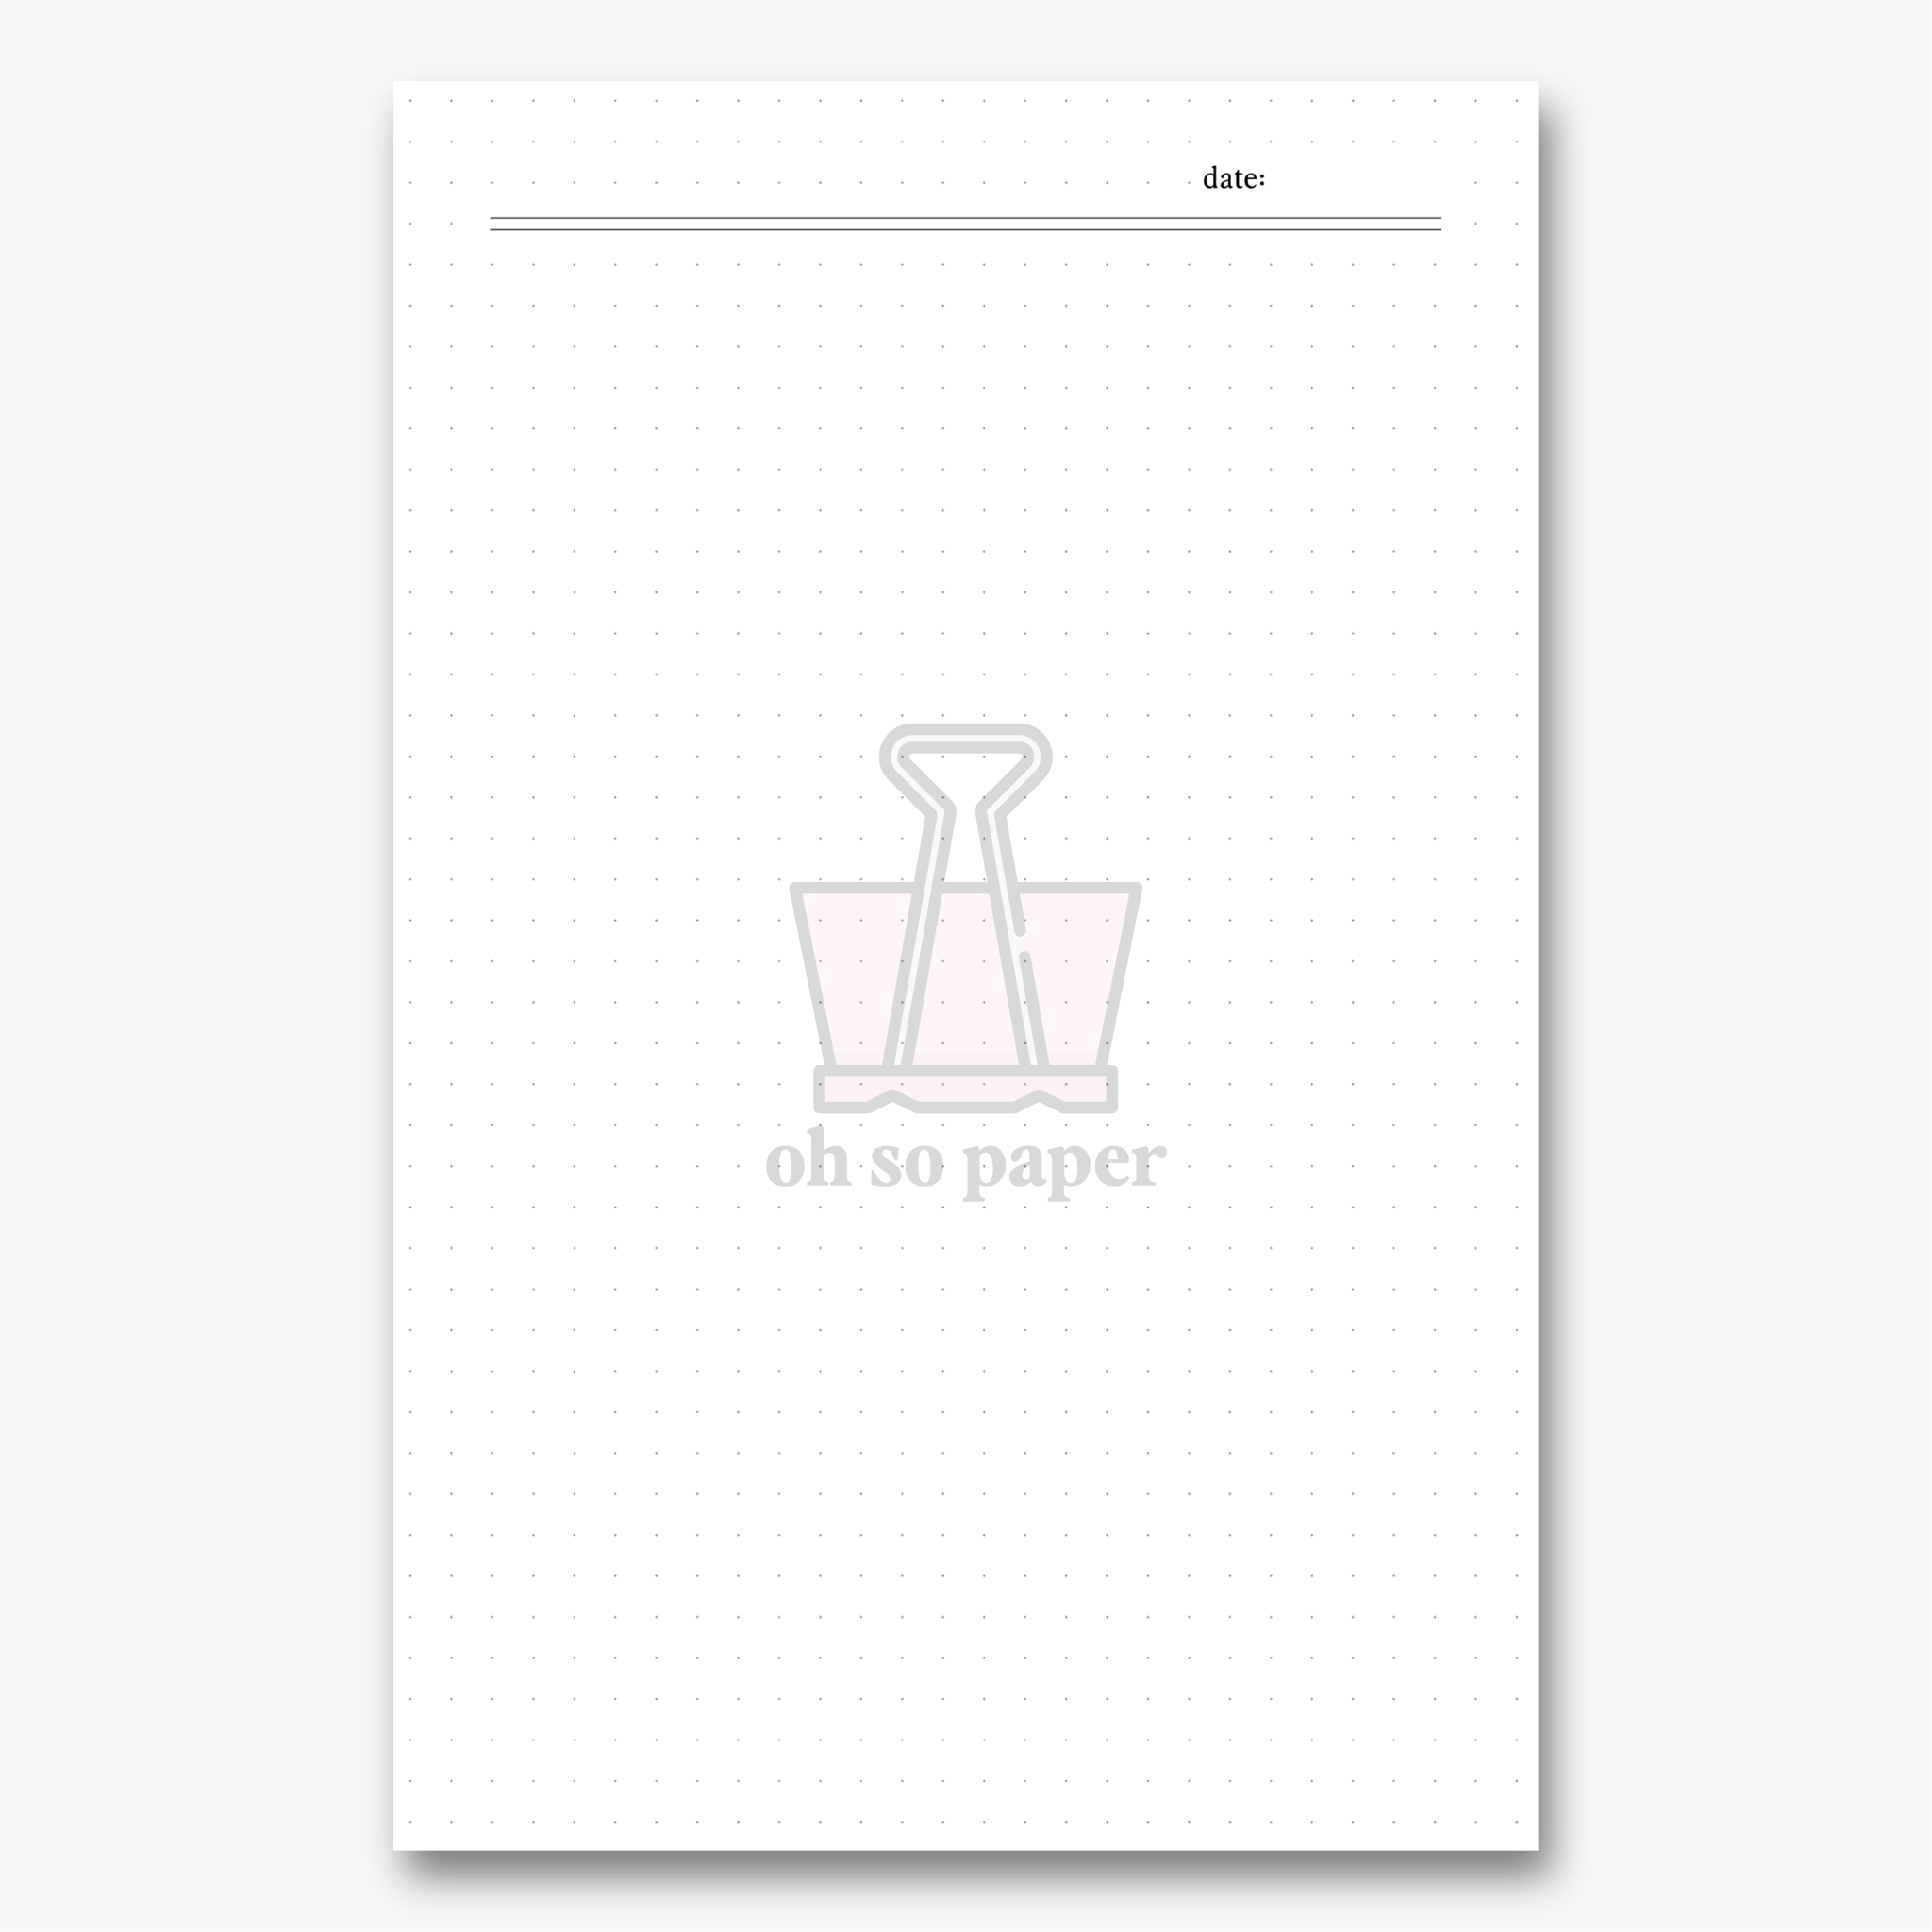 Dot Grid Paper Pack - ohsopaper